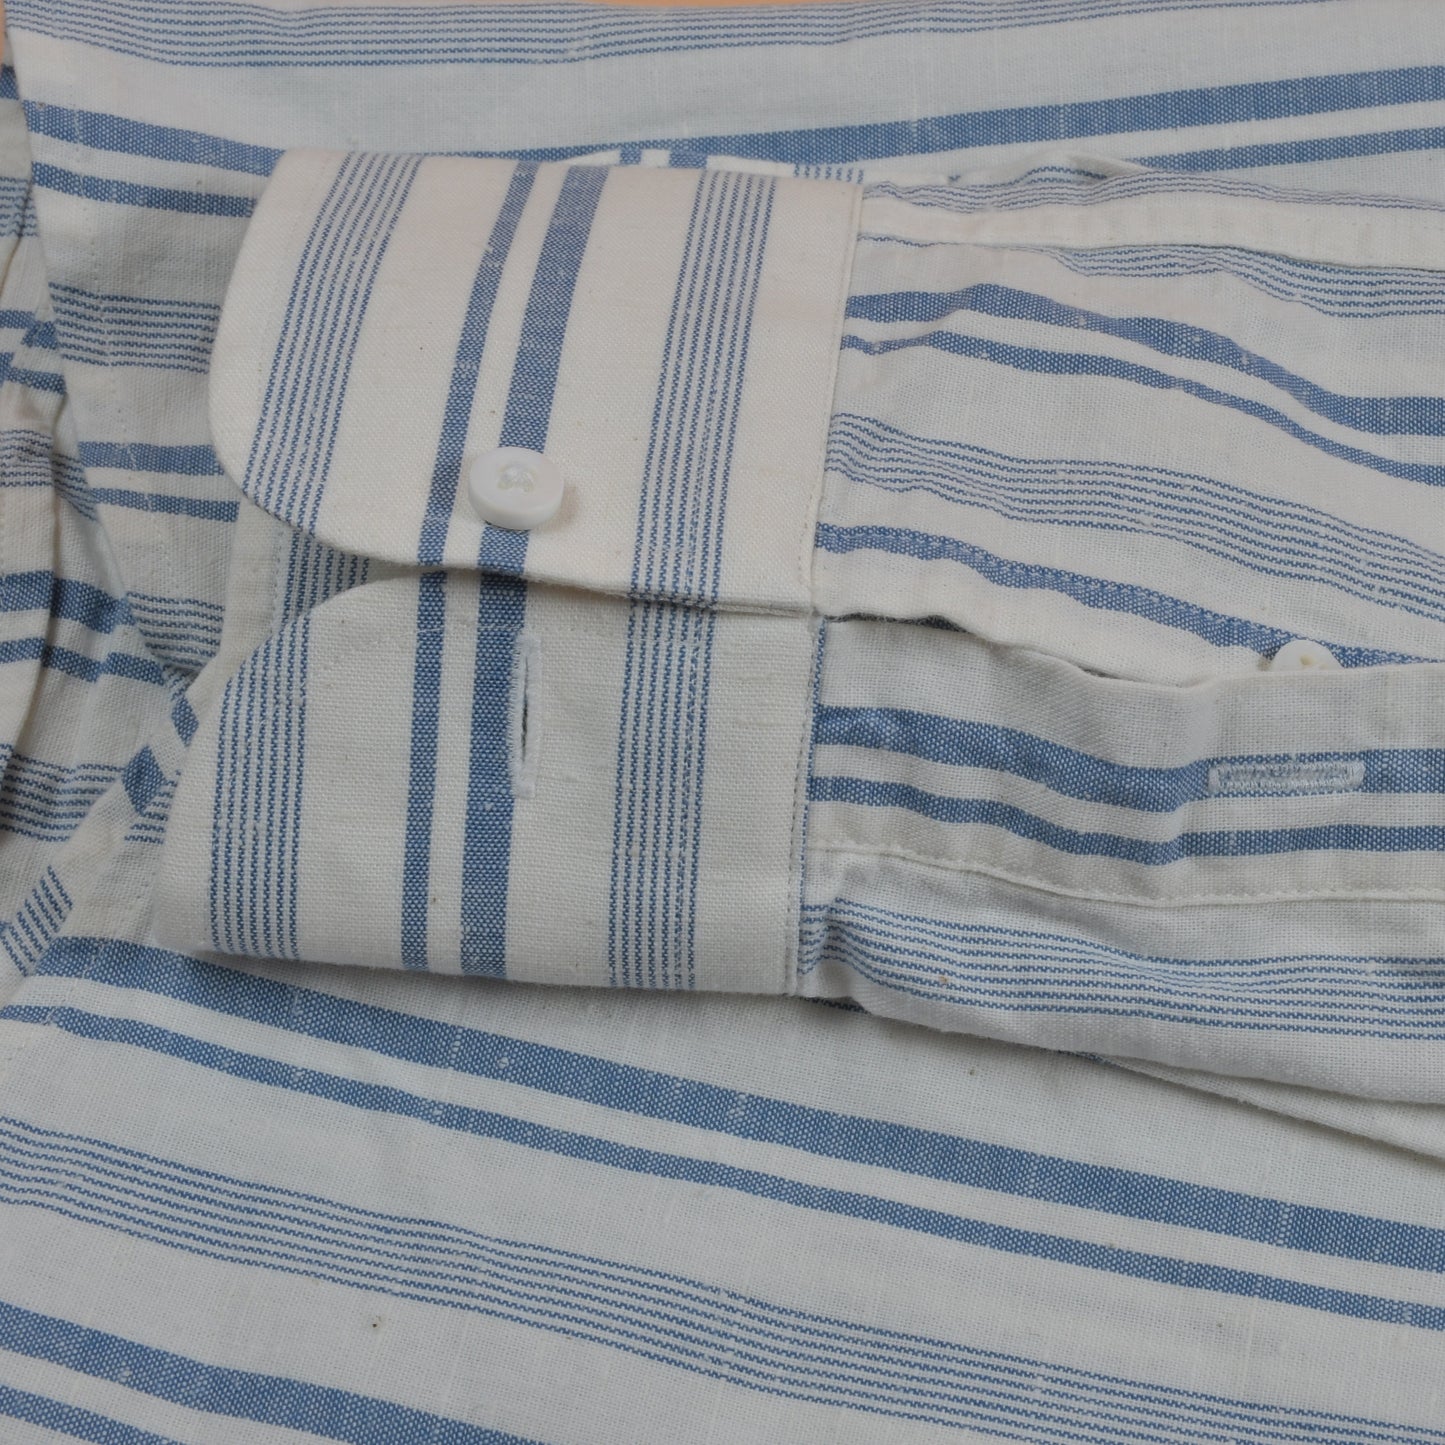 [Open Box - Like New] Thomas Mason Cream Multi Navy Stripes Shirt - SS015